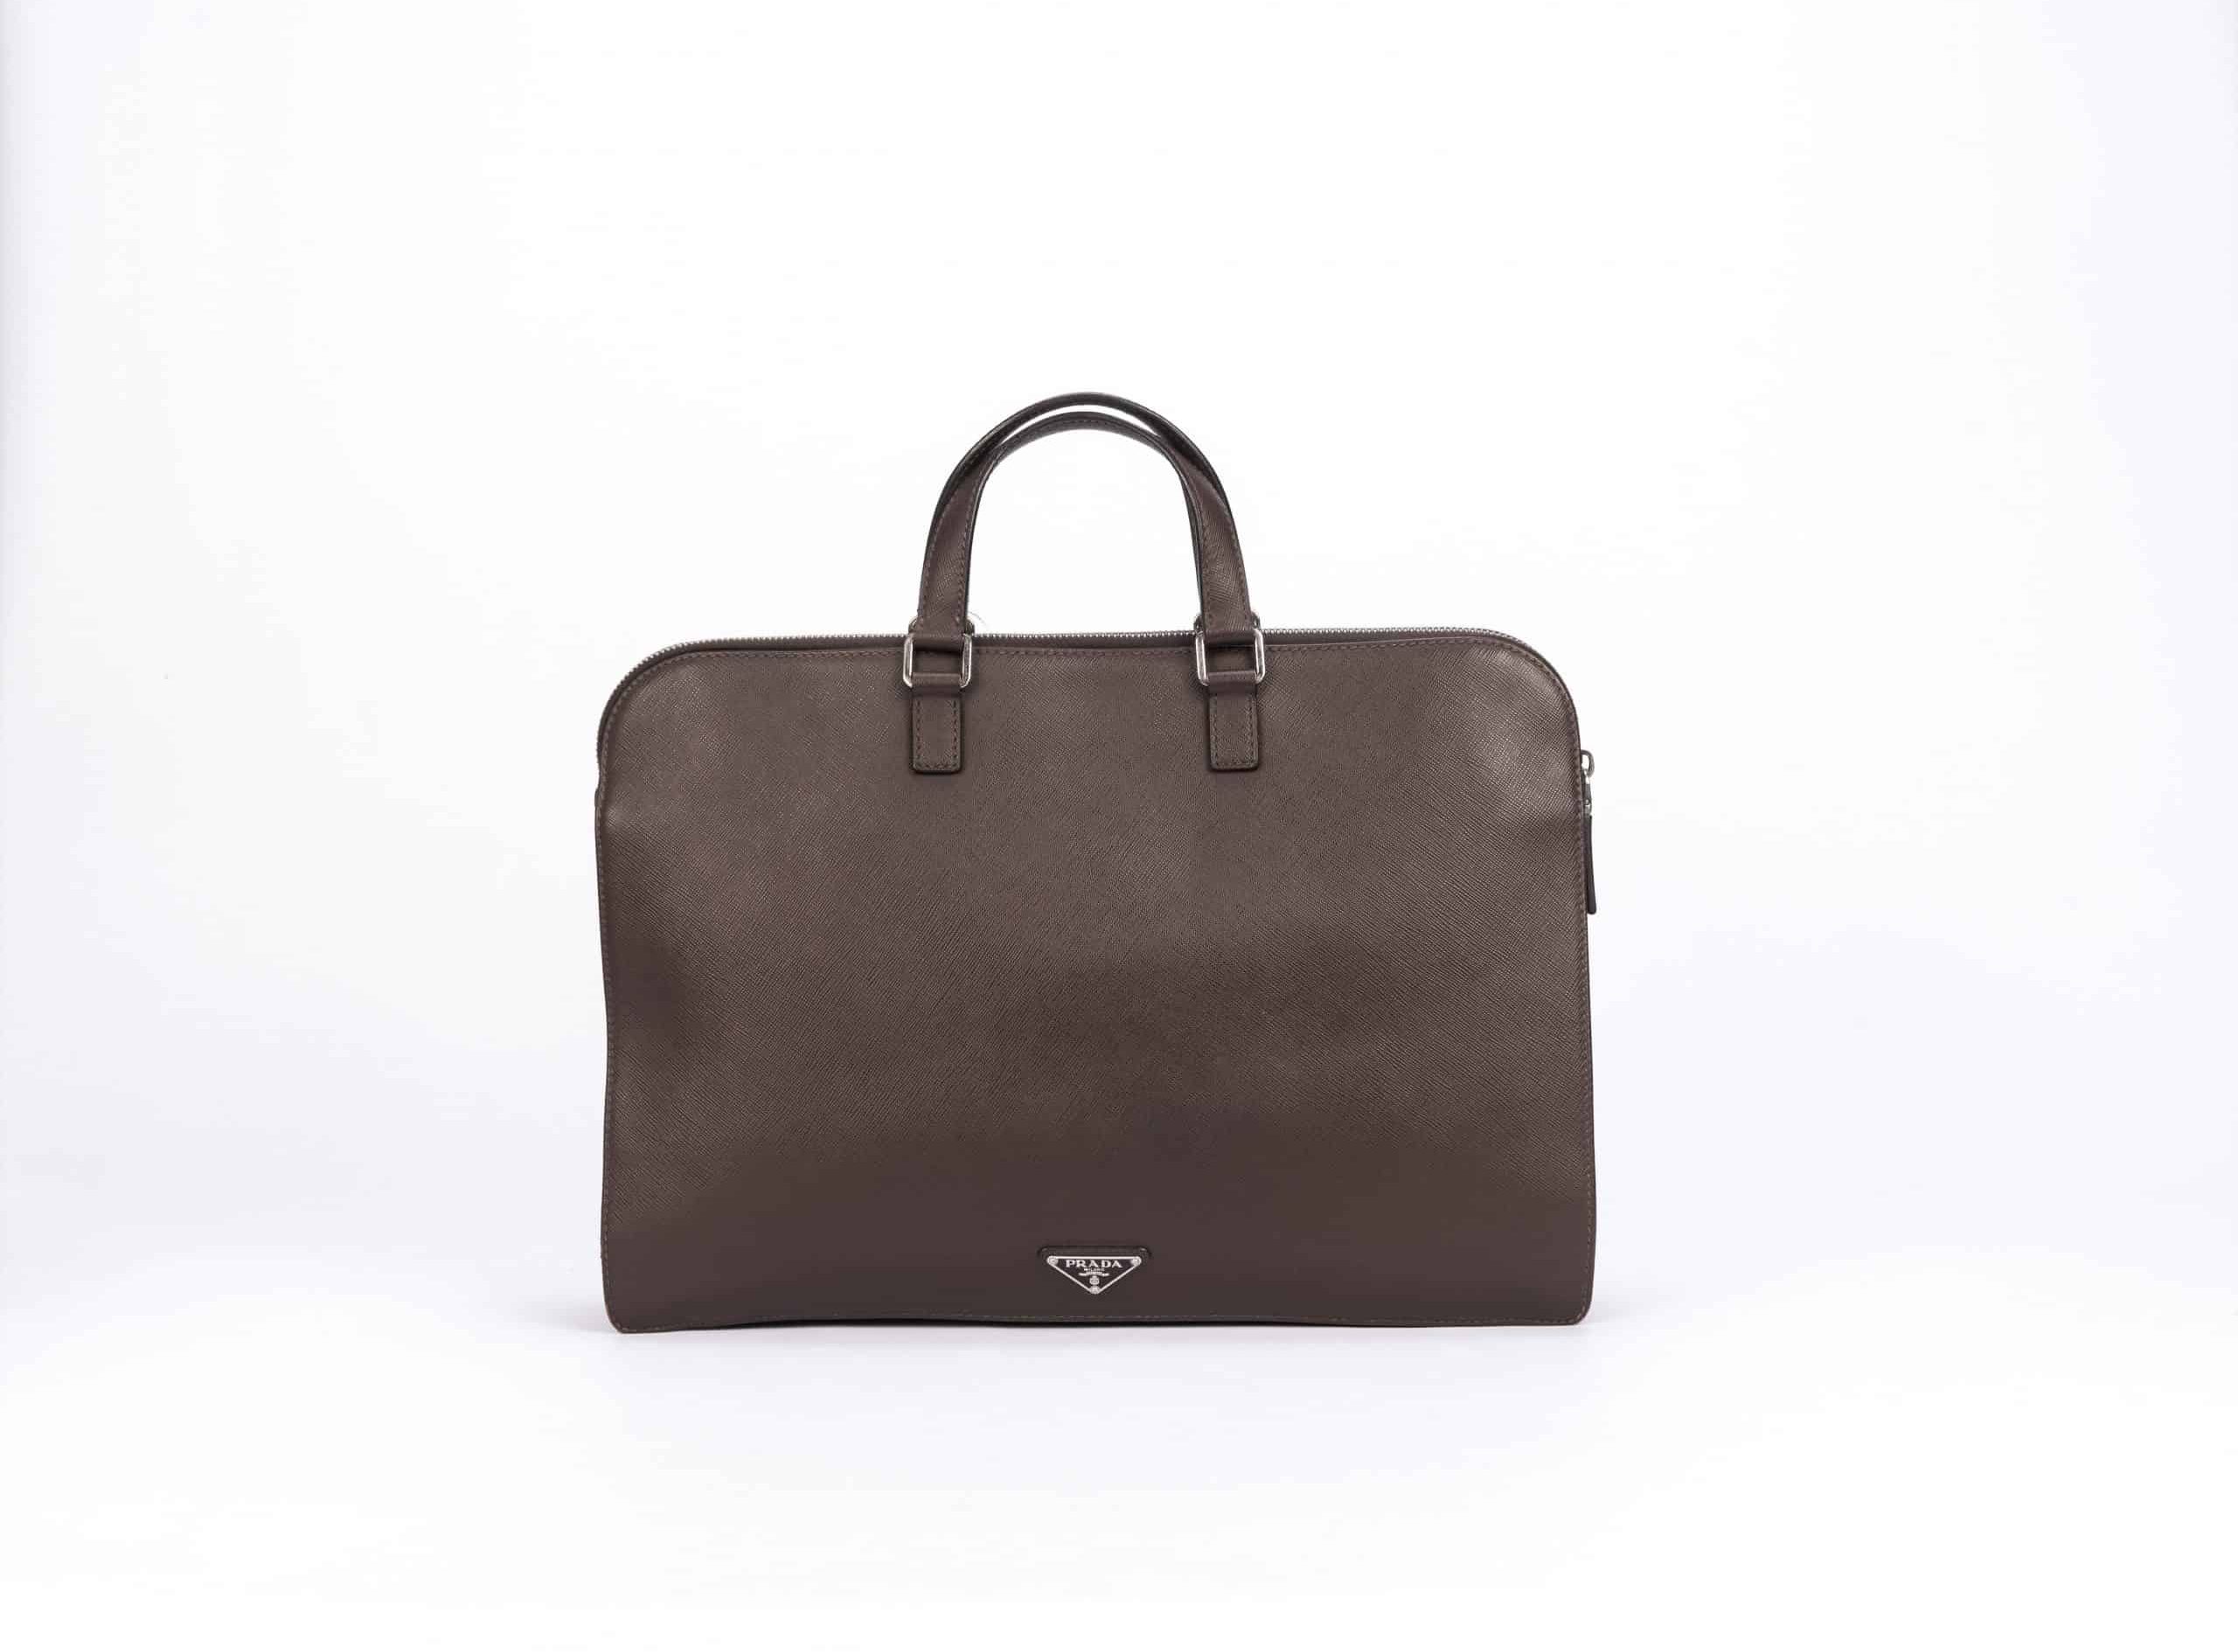 Prada Saffiano Leather Computer Bag in Teavel Caffe-brown - 1